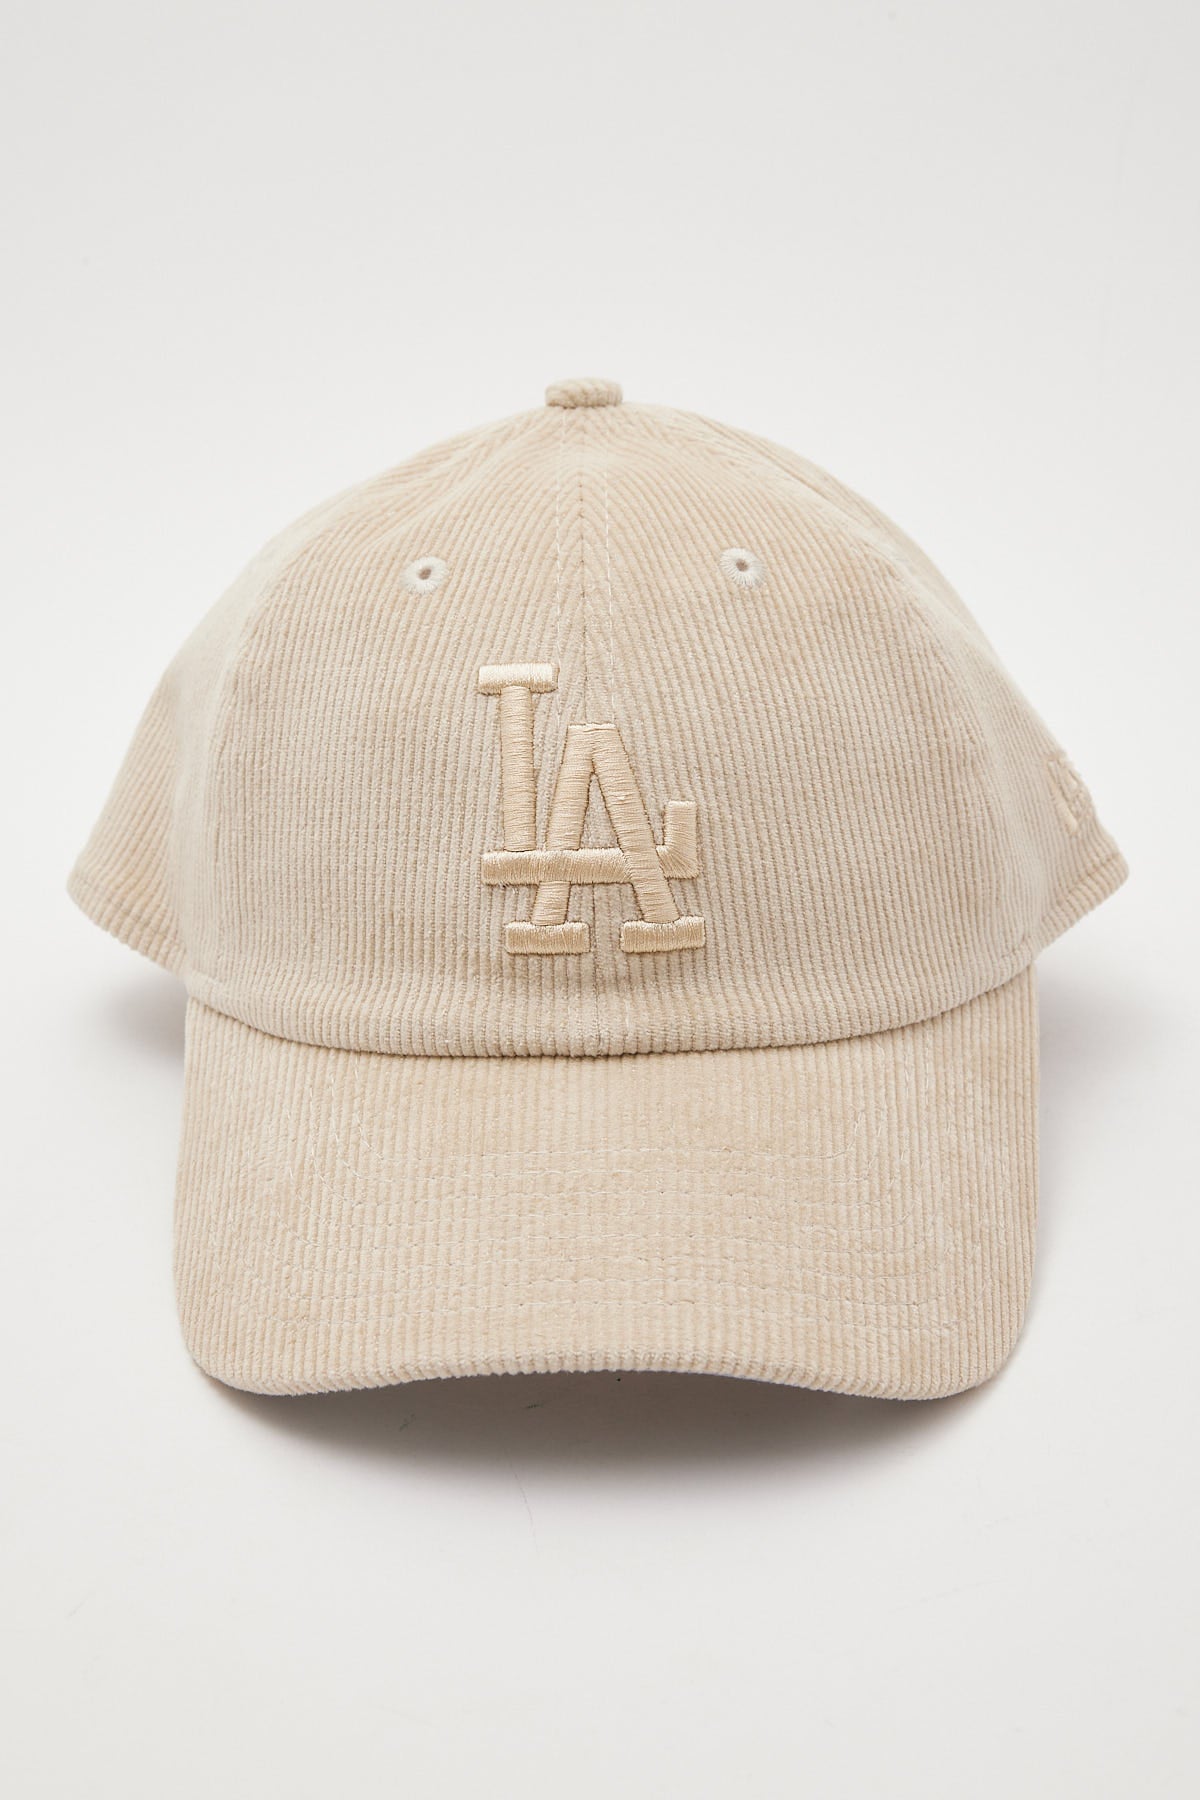 New Era Casual Classic LA Dodgers Corduroy Cream